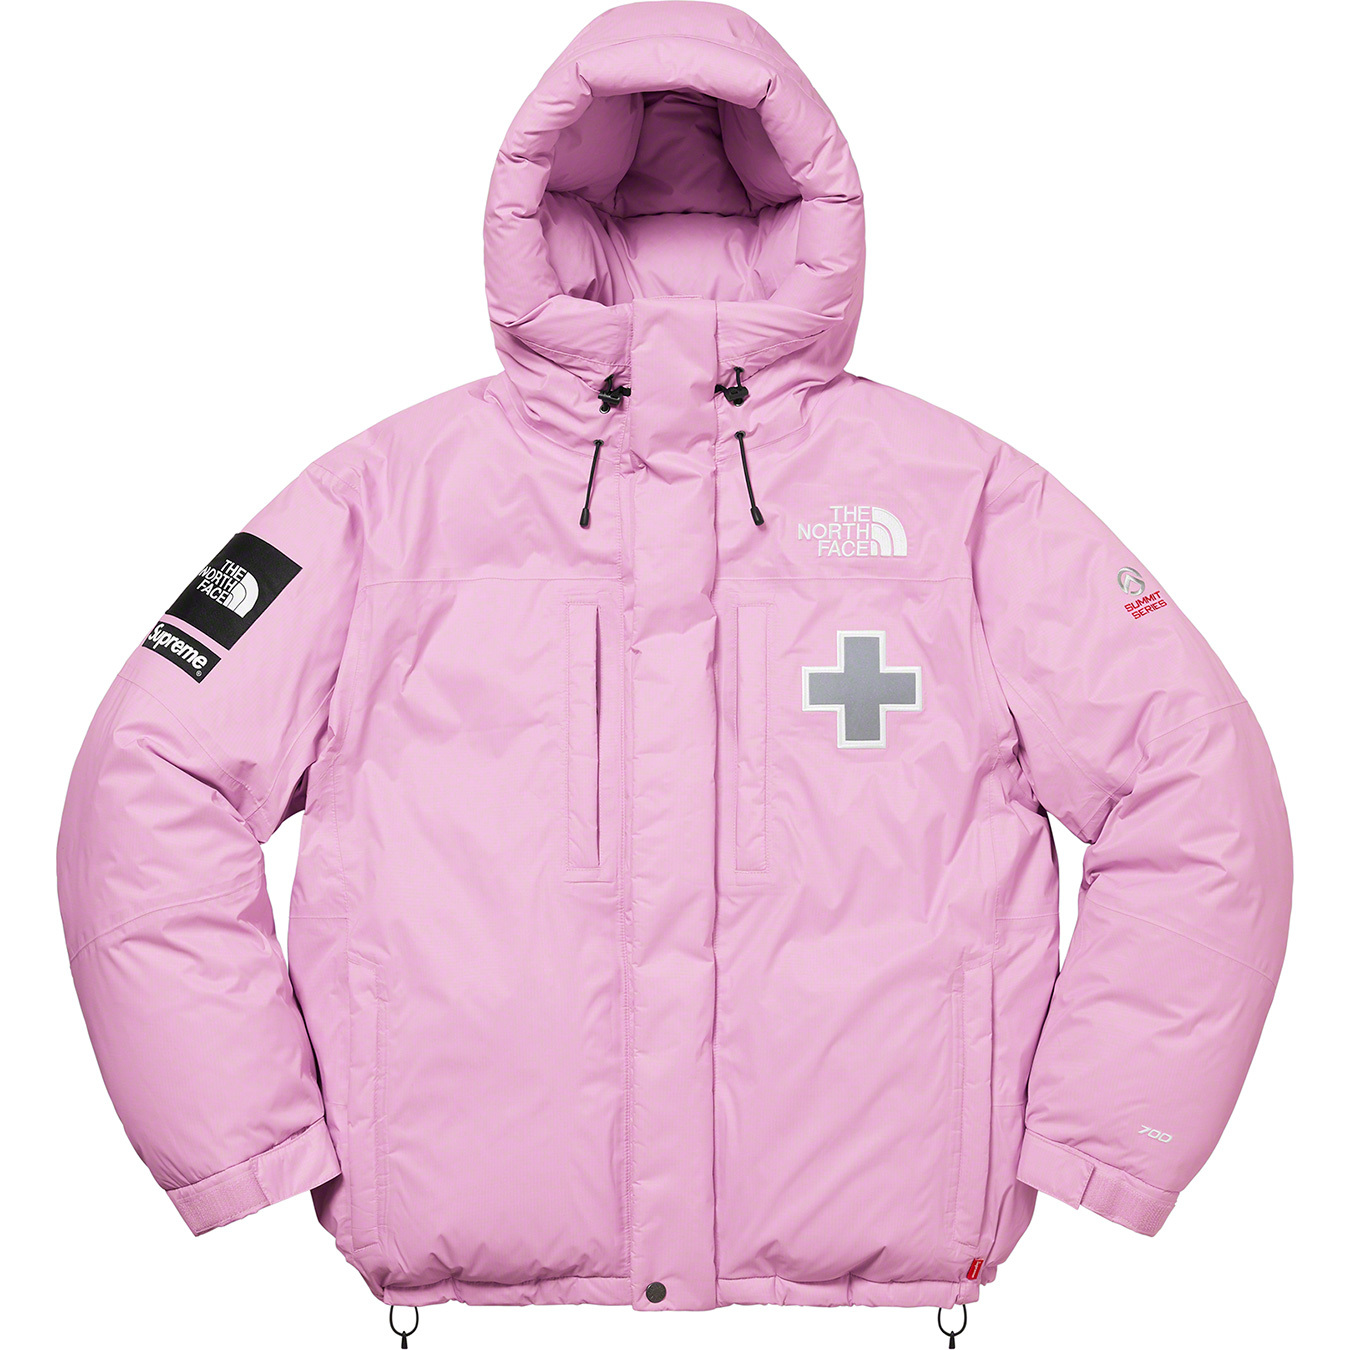 Supreme®/The North Face® Summit Series Rescue Baltoro Jacket 